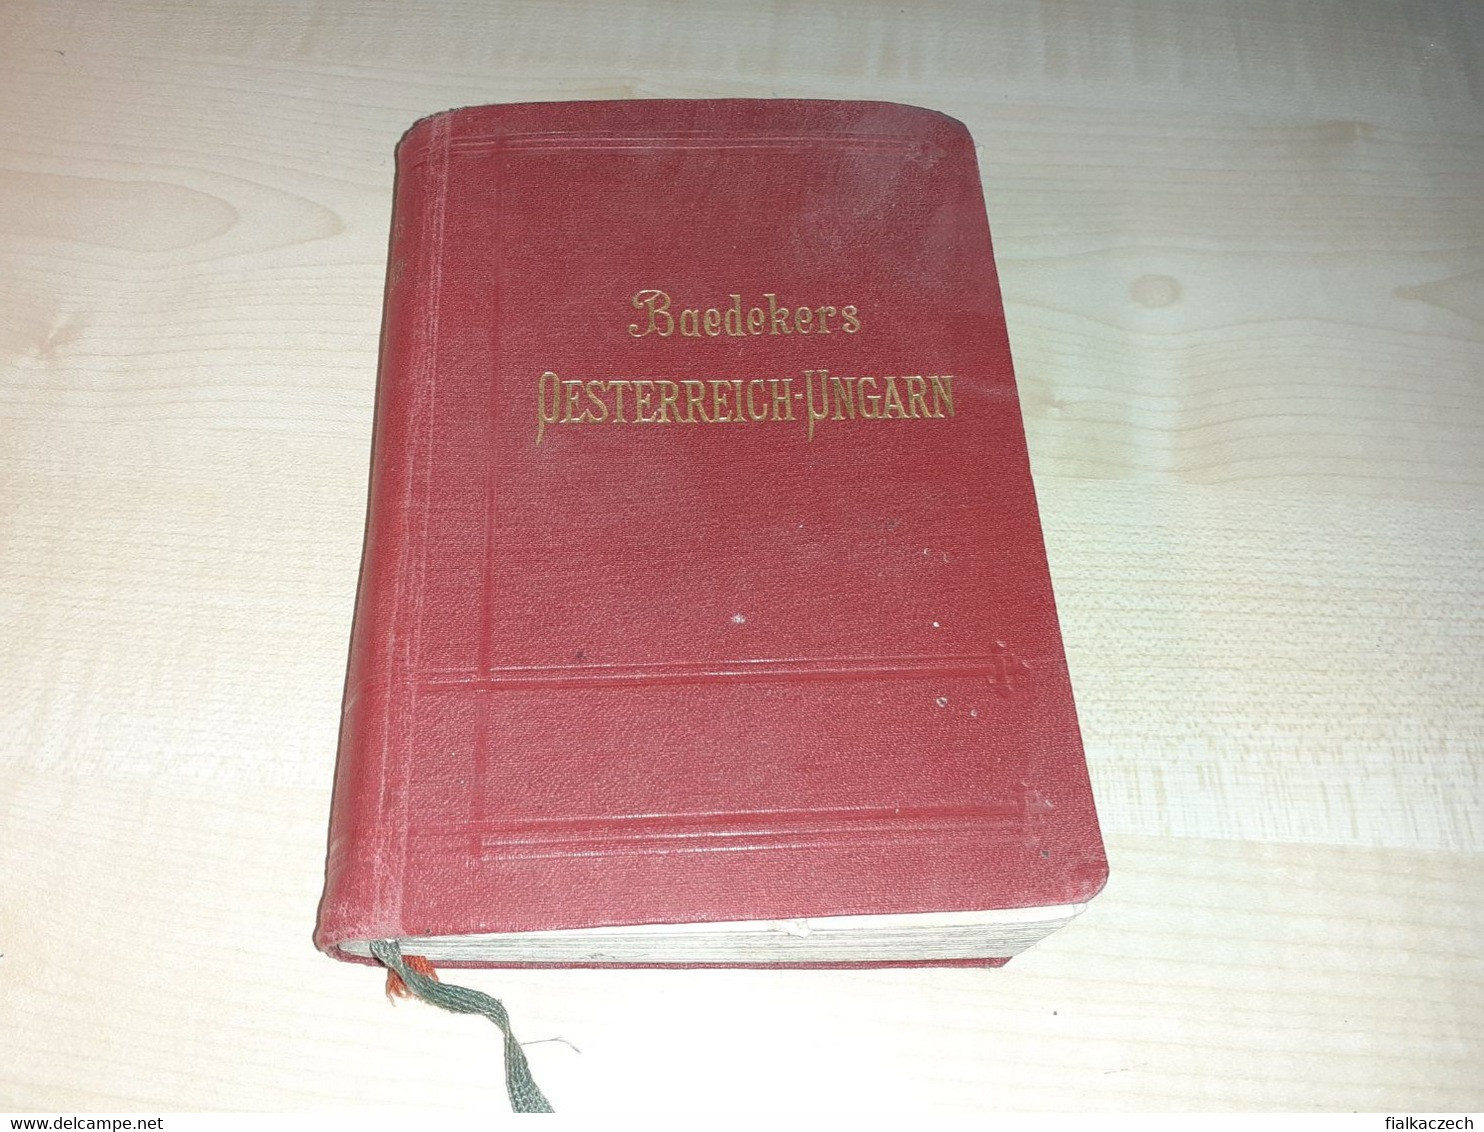 Baedekers, Österreich - Ungarn, Belgrad, Cetinje, Bukarest, Tour Guide, 1910 - Leipzig, Austria - Hungary - Austria